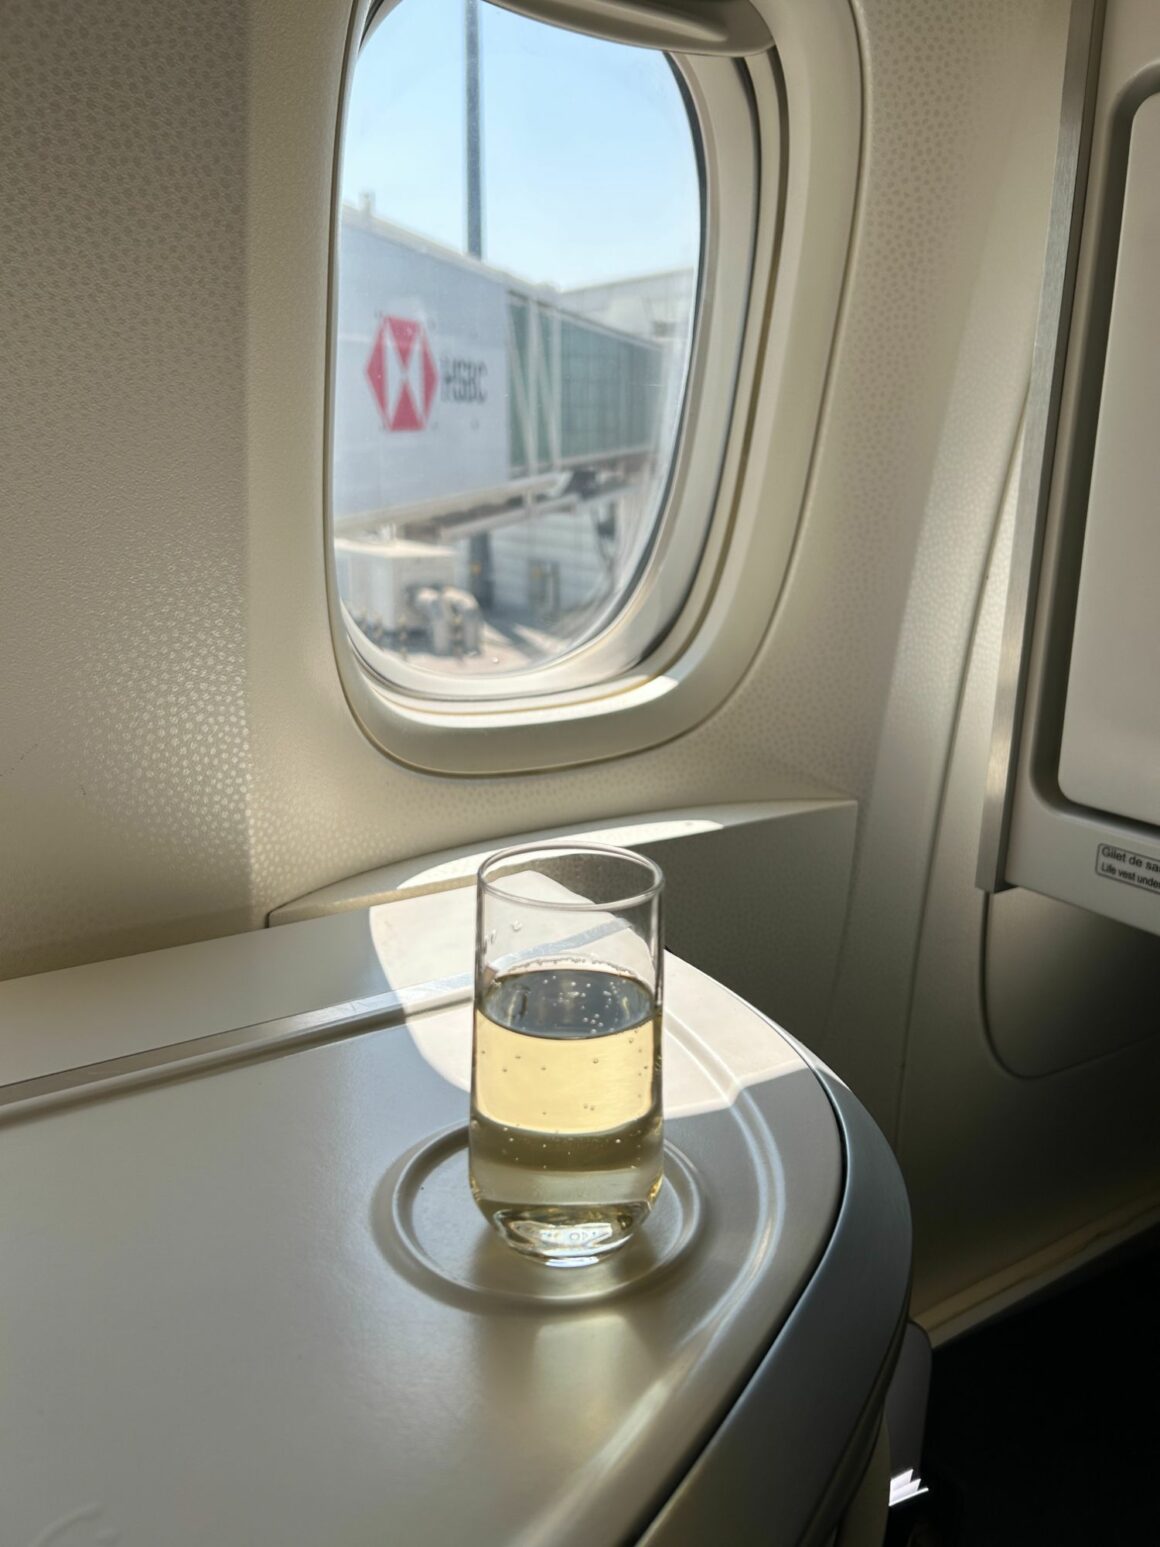 Air France B777-200ER business class champagne 